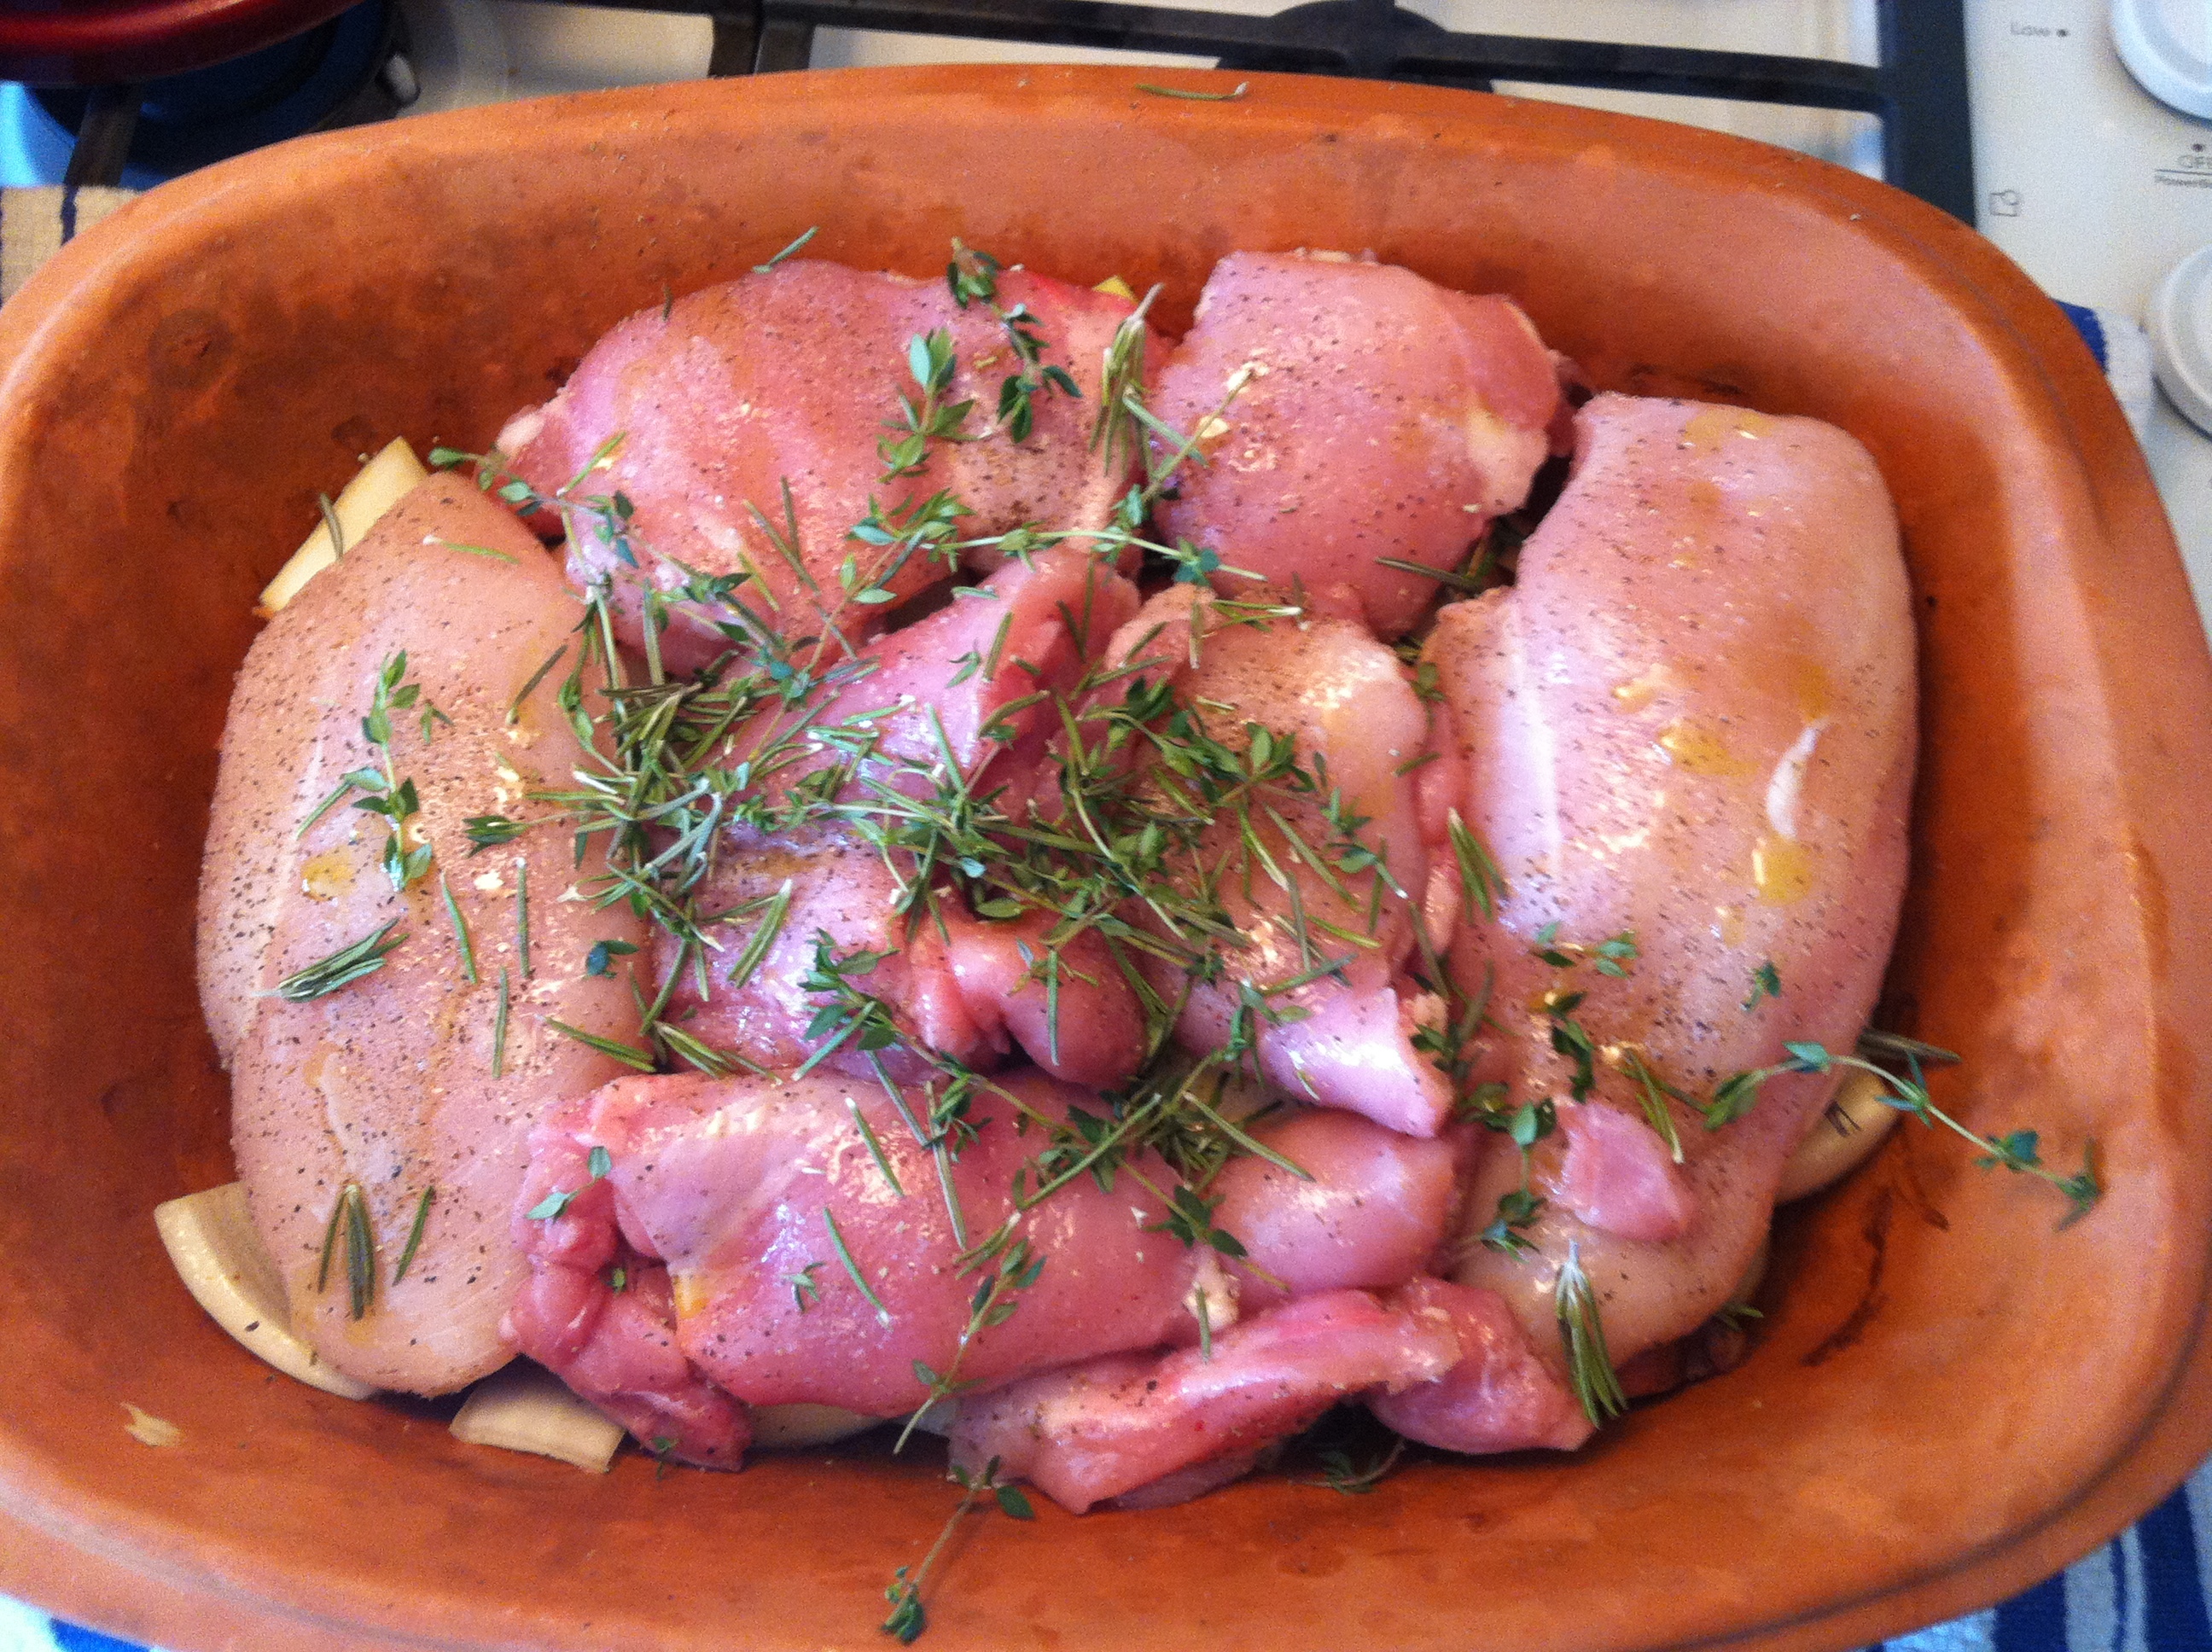 Romertopf Roast Chicken or Clay Pot Chicken - My Turn for Us